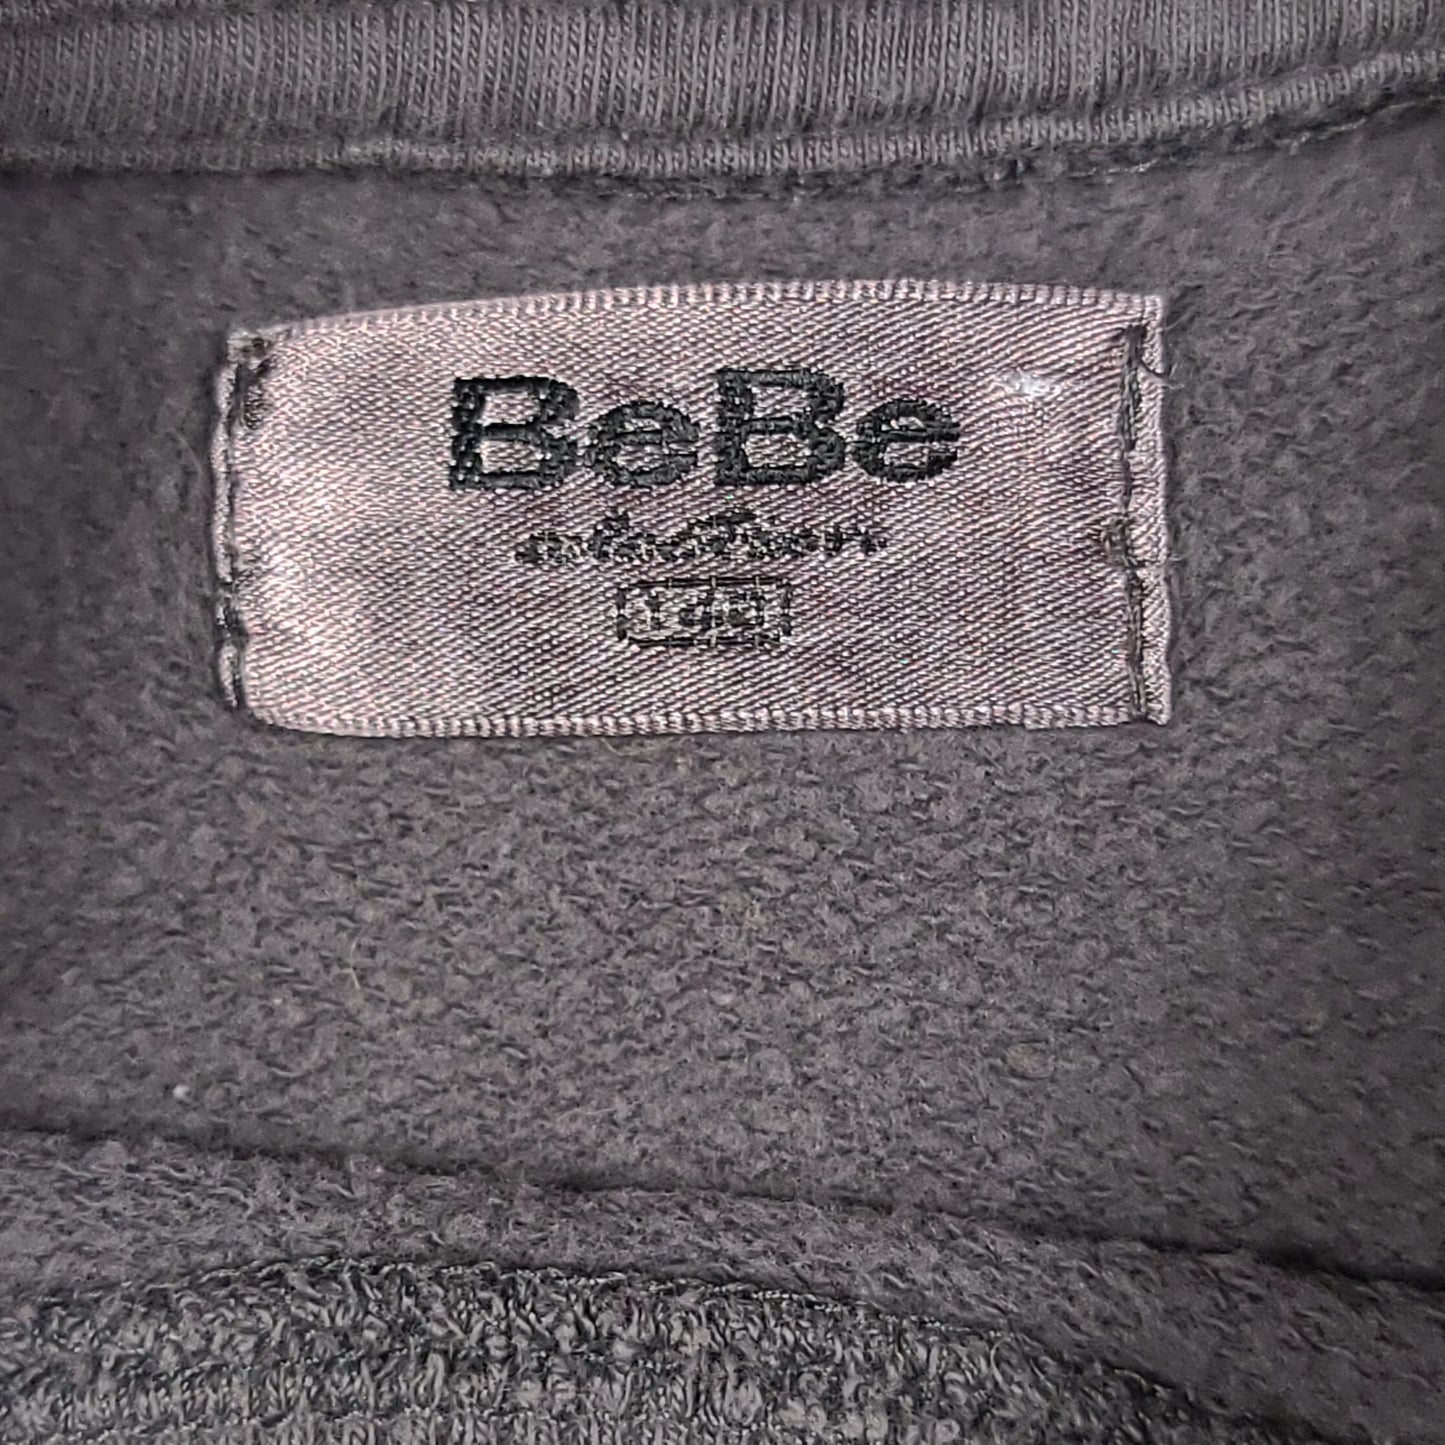 Bebe Love is Real Gray Sweatshirt